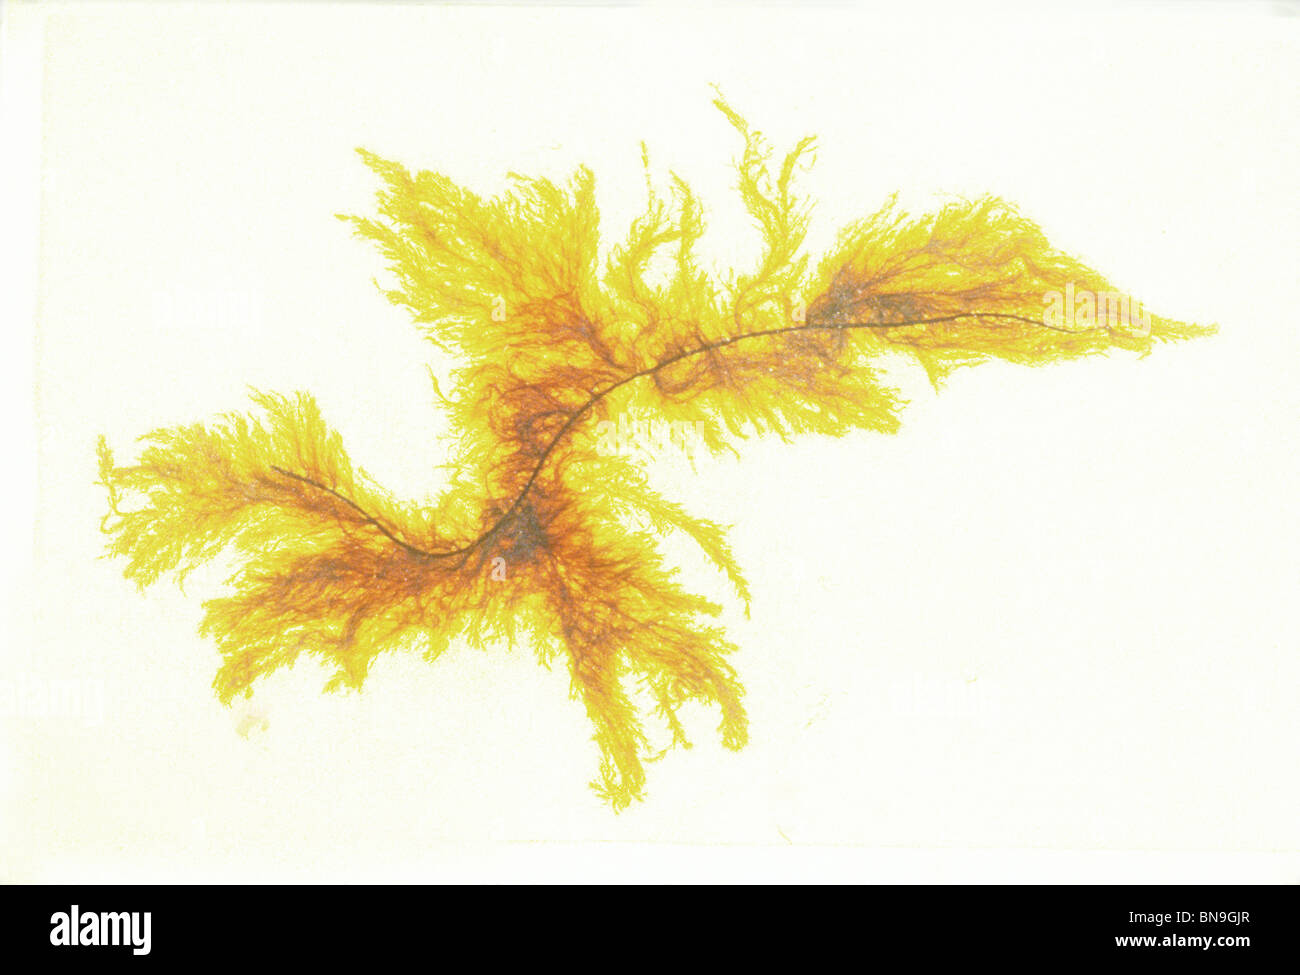 Ectocarpus siliculosus brown alga seaweed Stock Photo